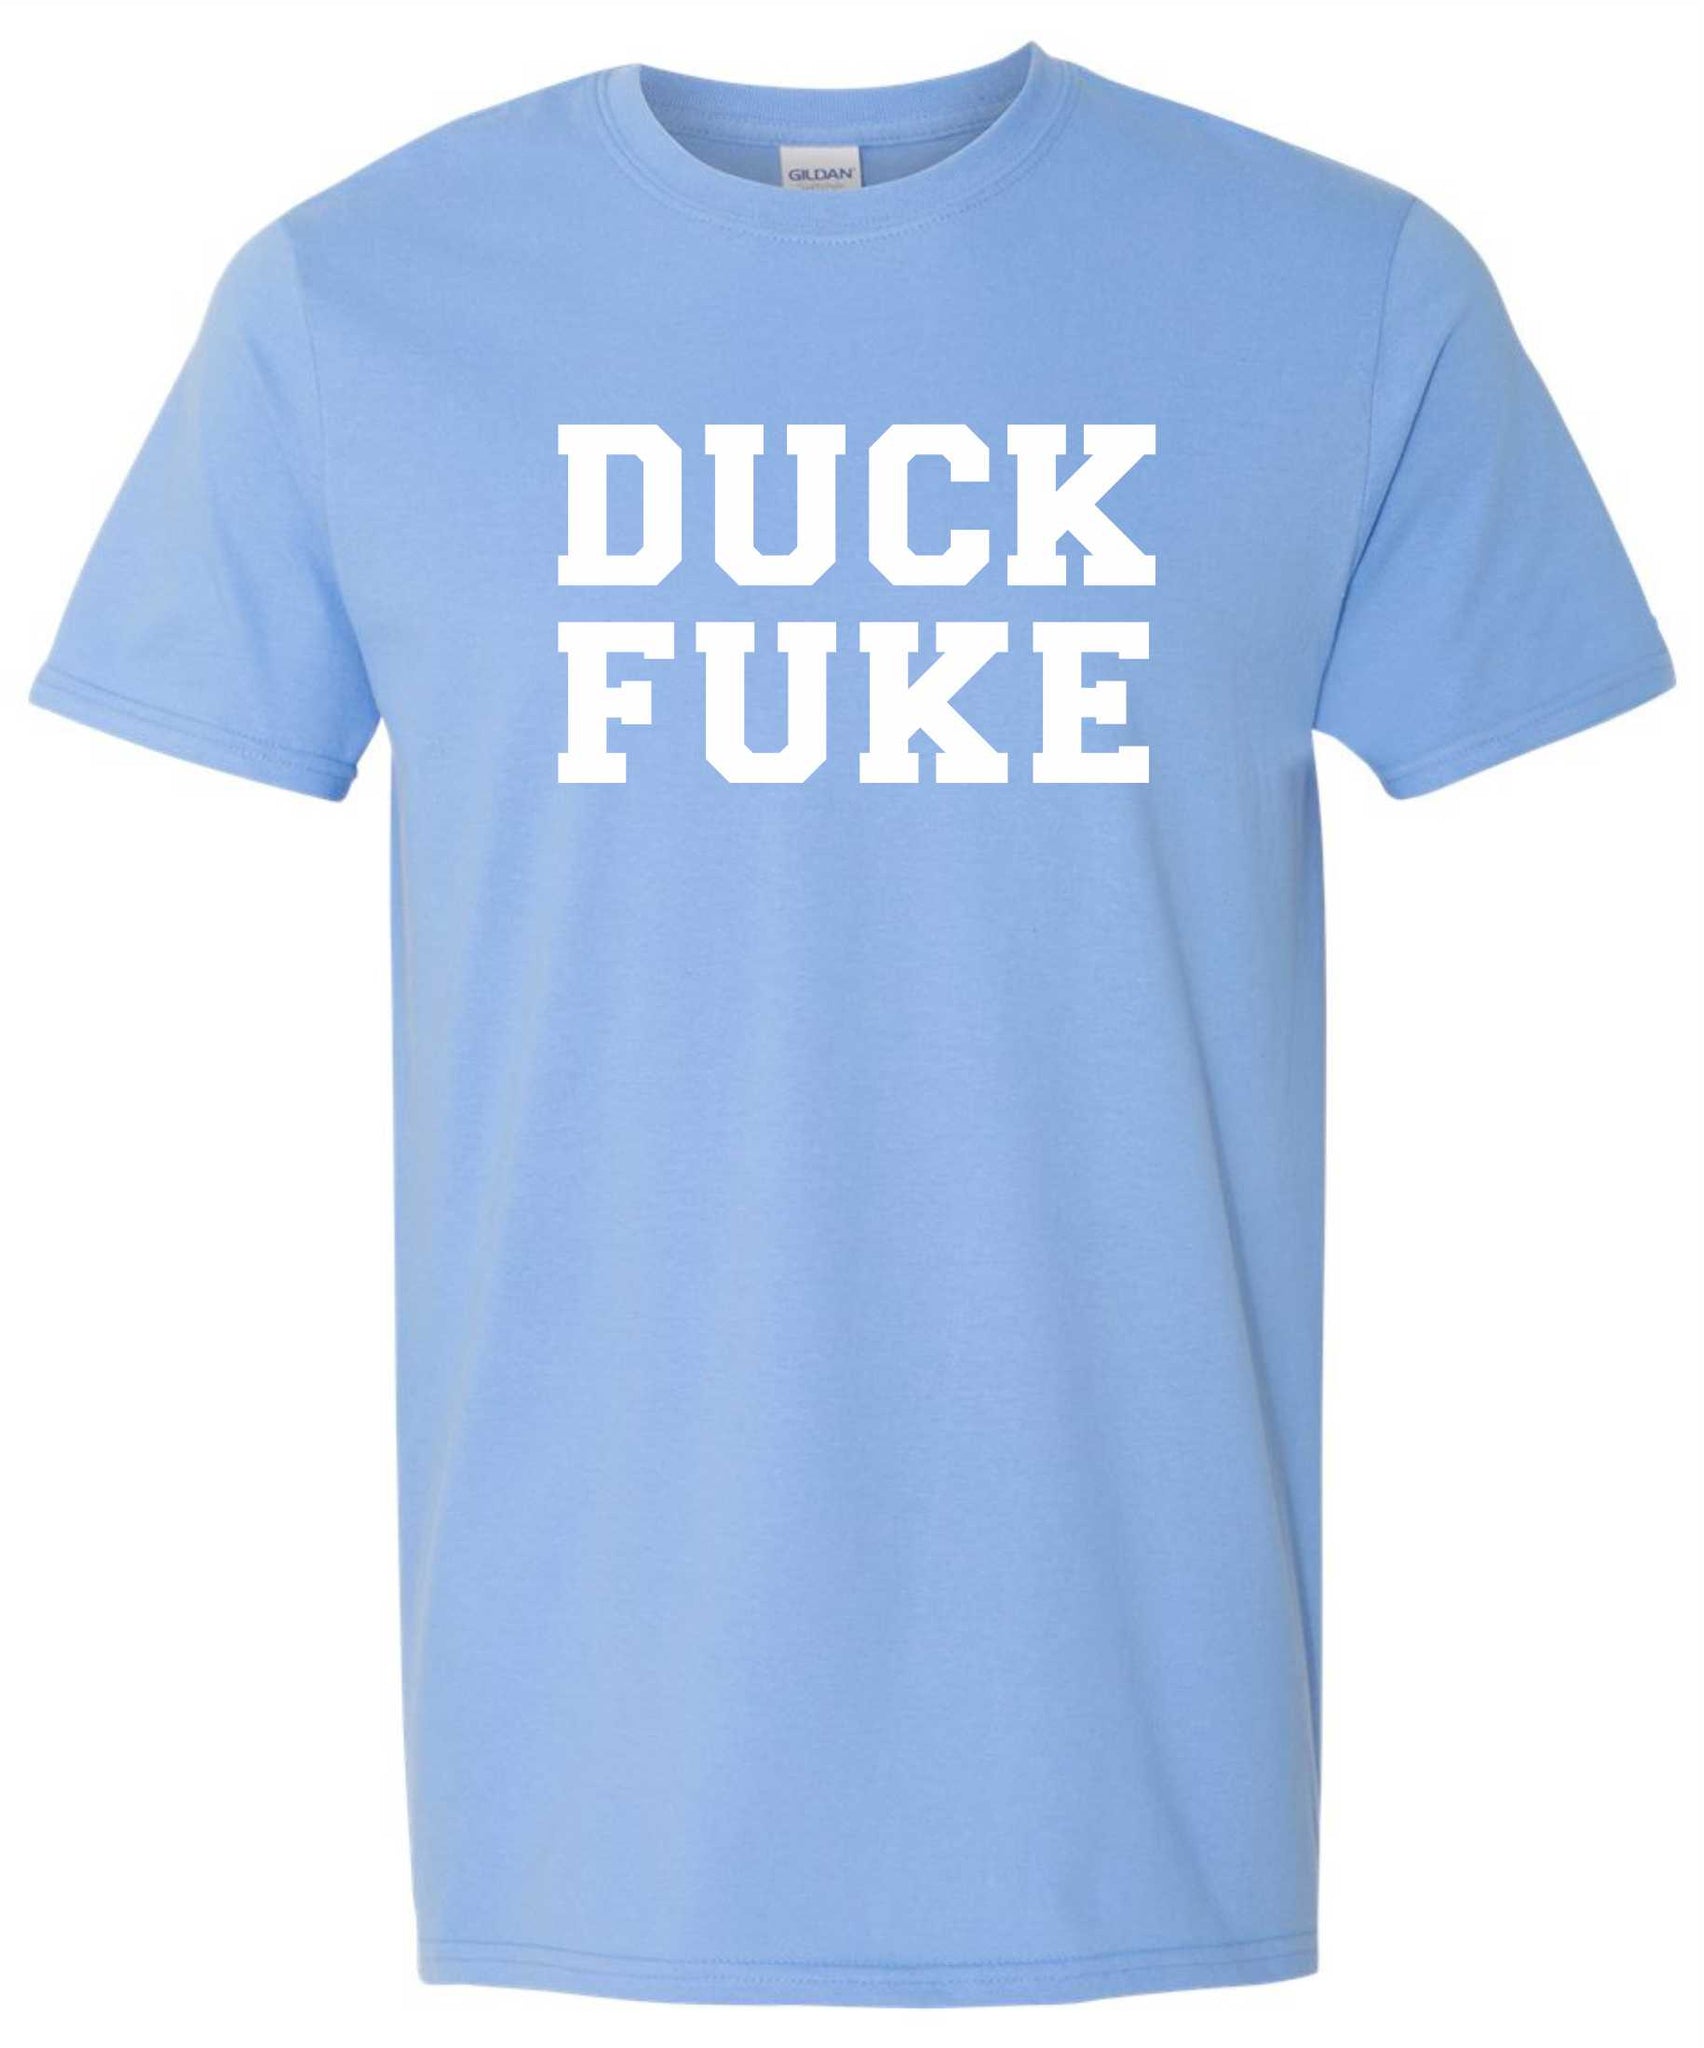 The merch Classic Carolina UNC - Duck Fuke T-Shirt Carolina Blue / 2XL